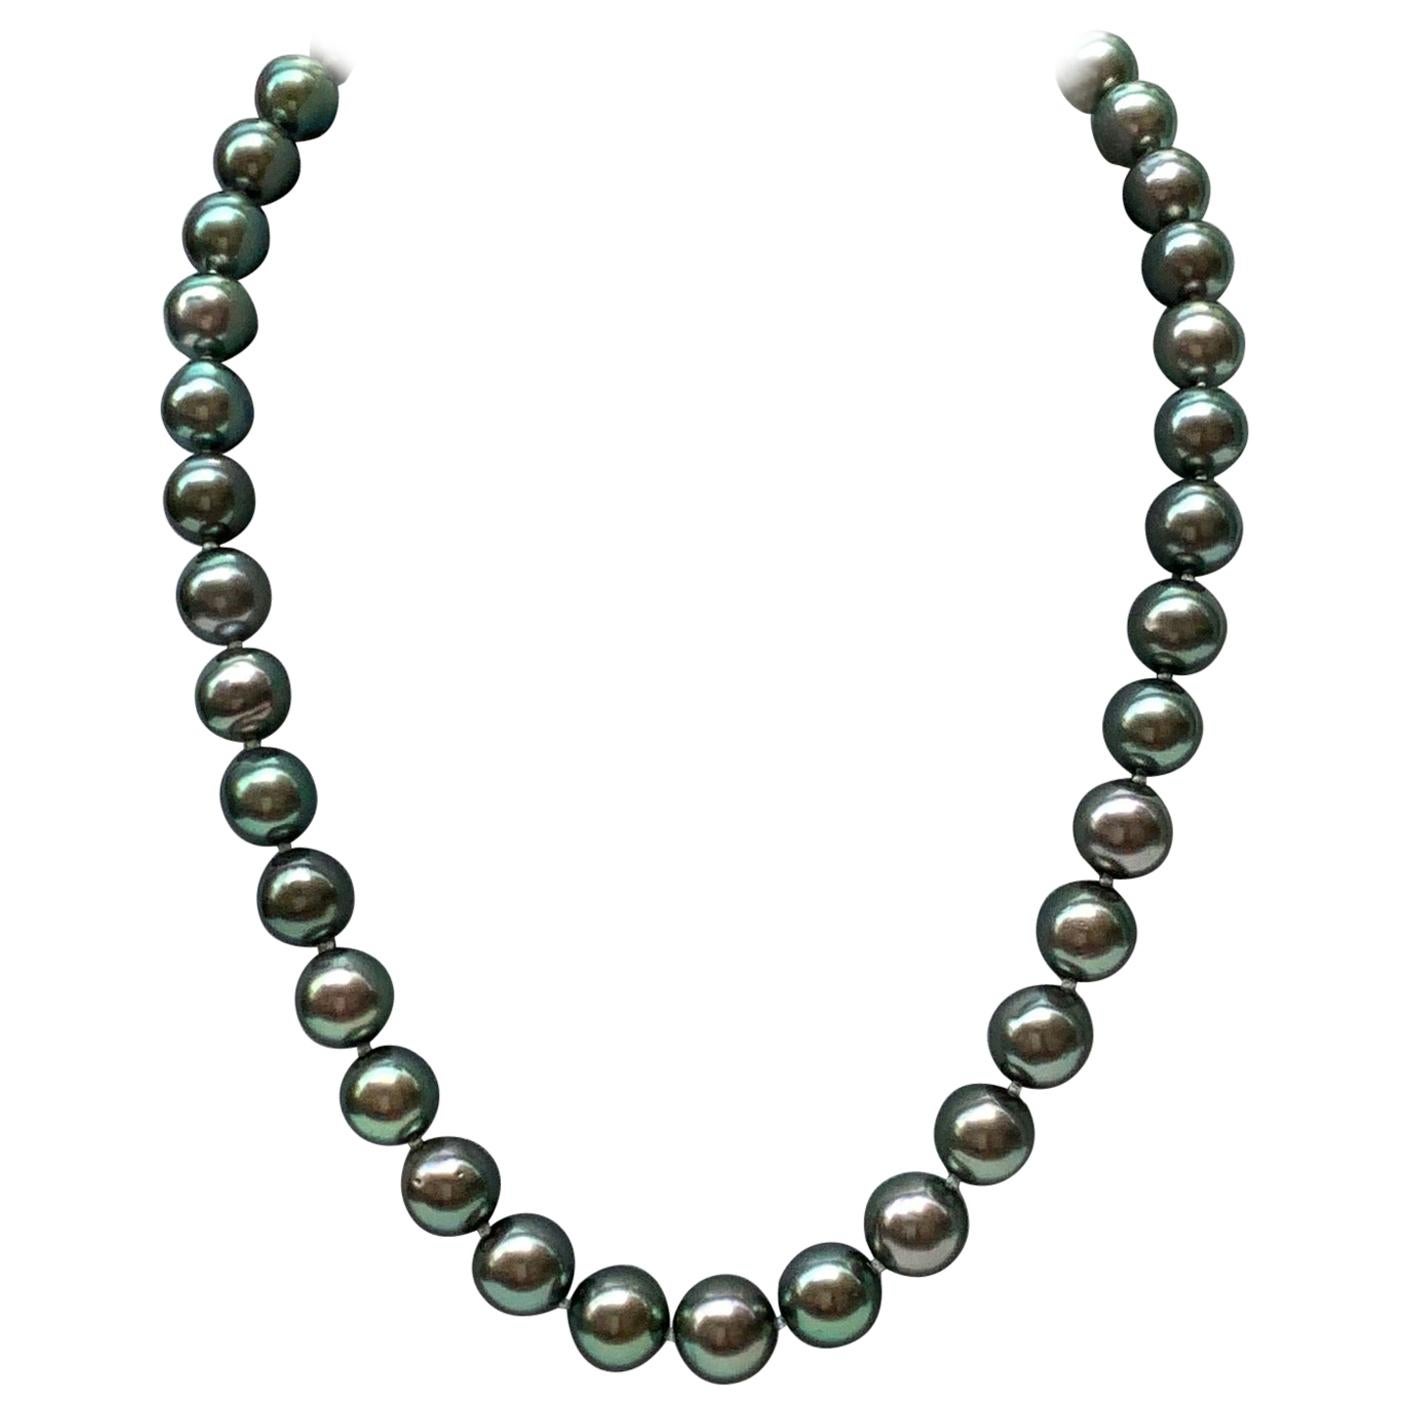 Collier de perles vertes des mers du Sud de Tahiti